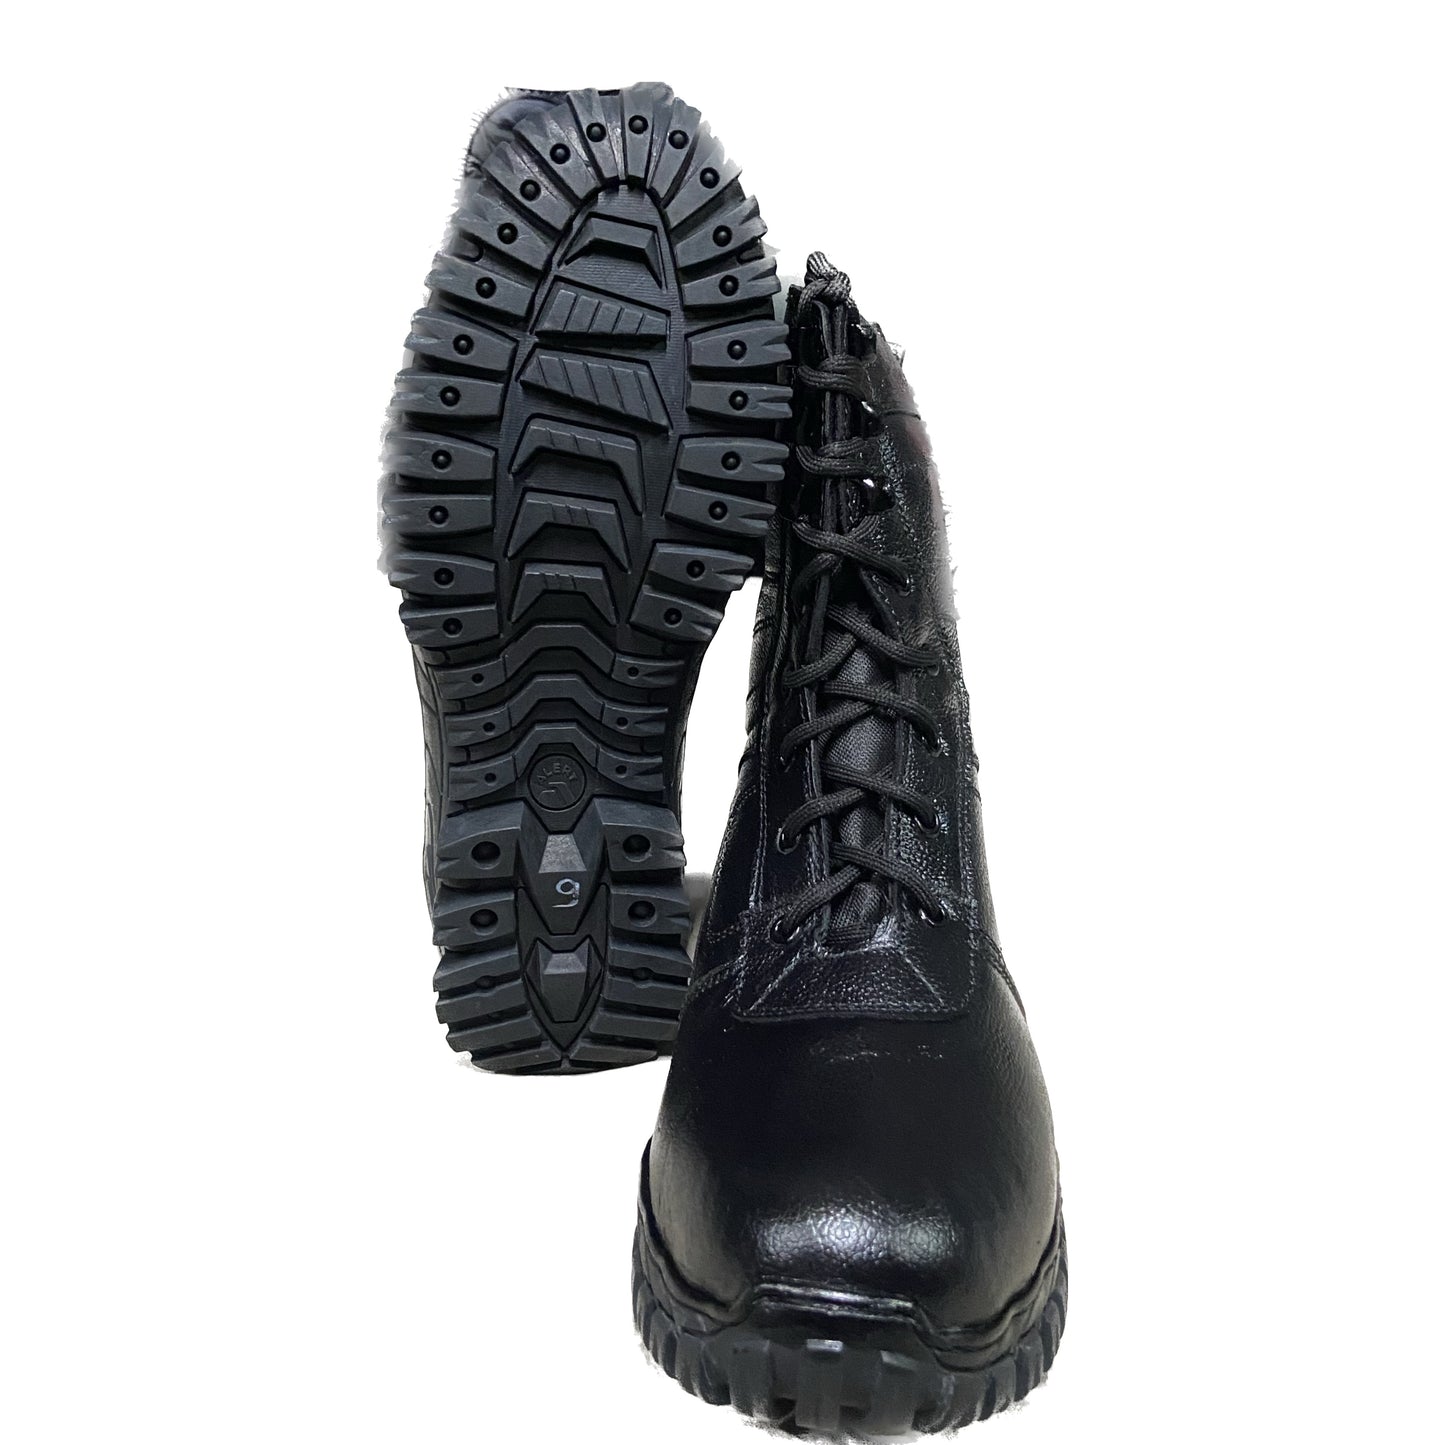 MEC GEAR Men's Black Leather Tactical Combat Army Boot